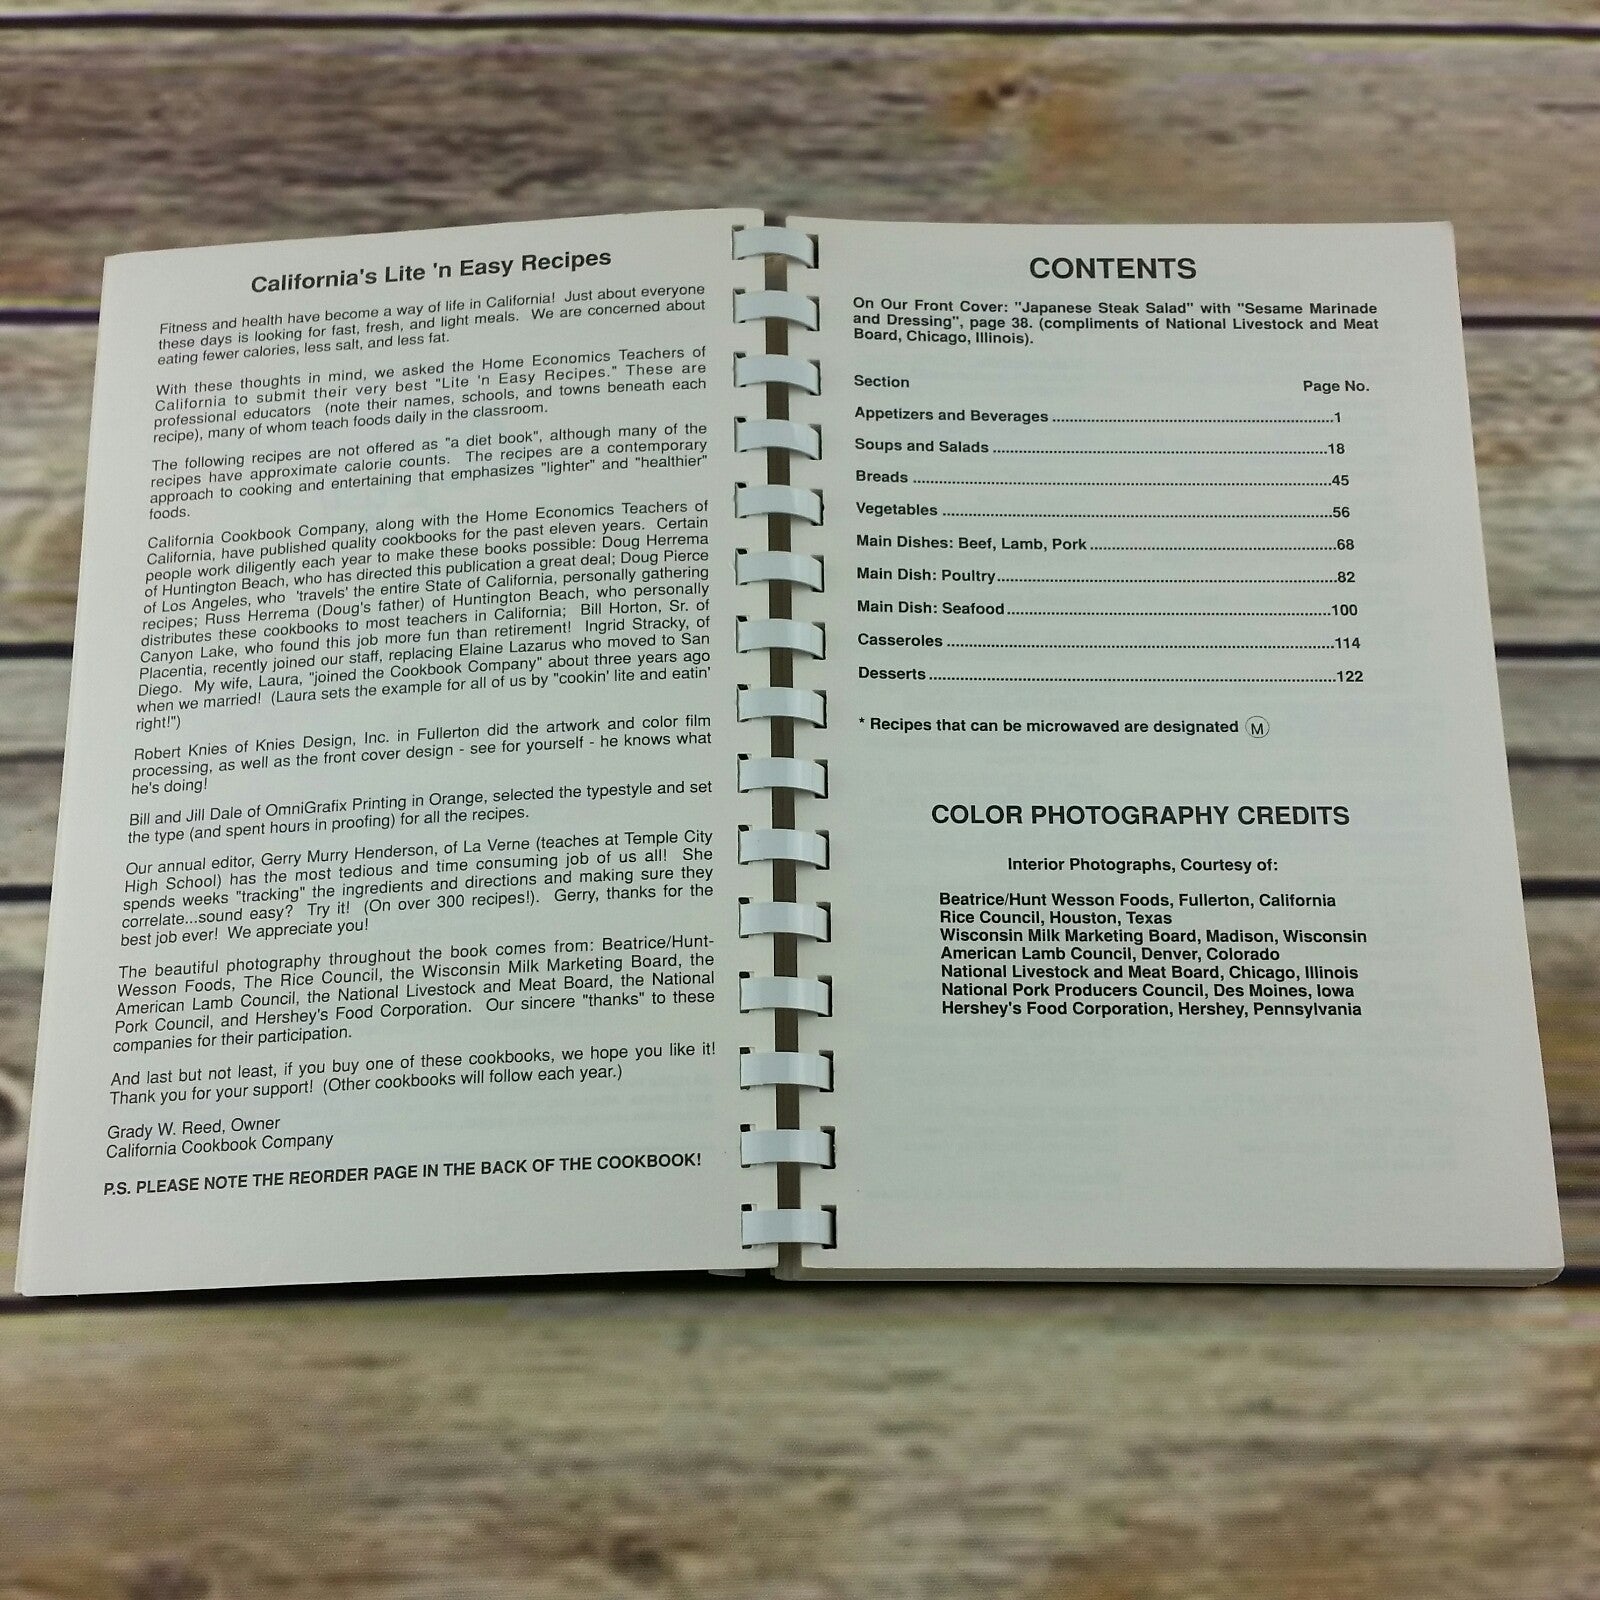 Vintage California Cookbook Lite N Easy Recipes Home Economics Teachers 1989 - At Grandma's Table